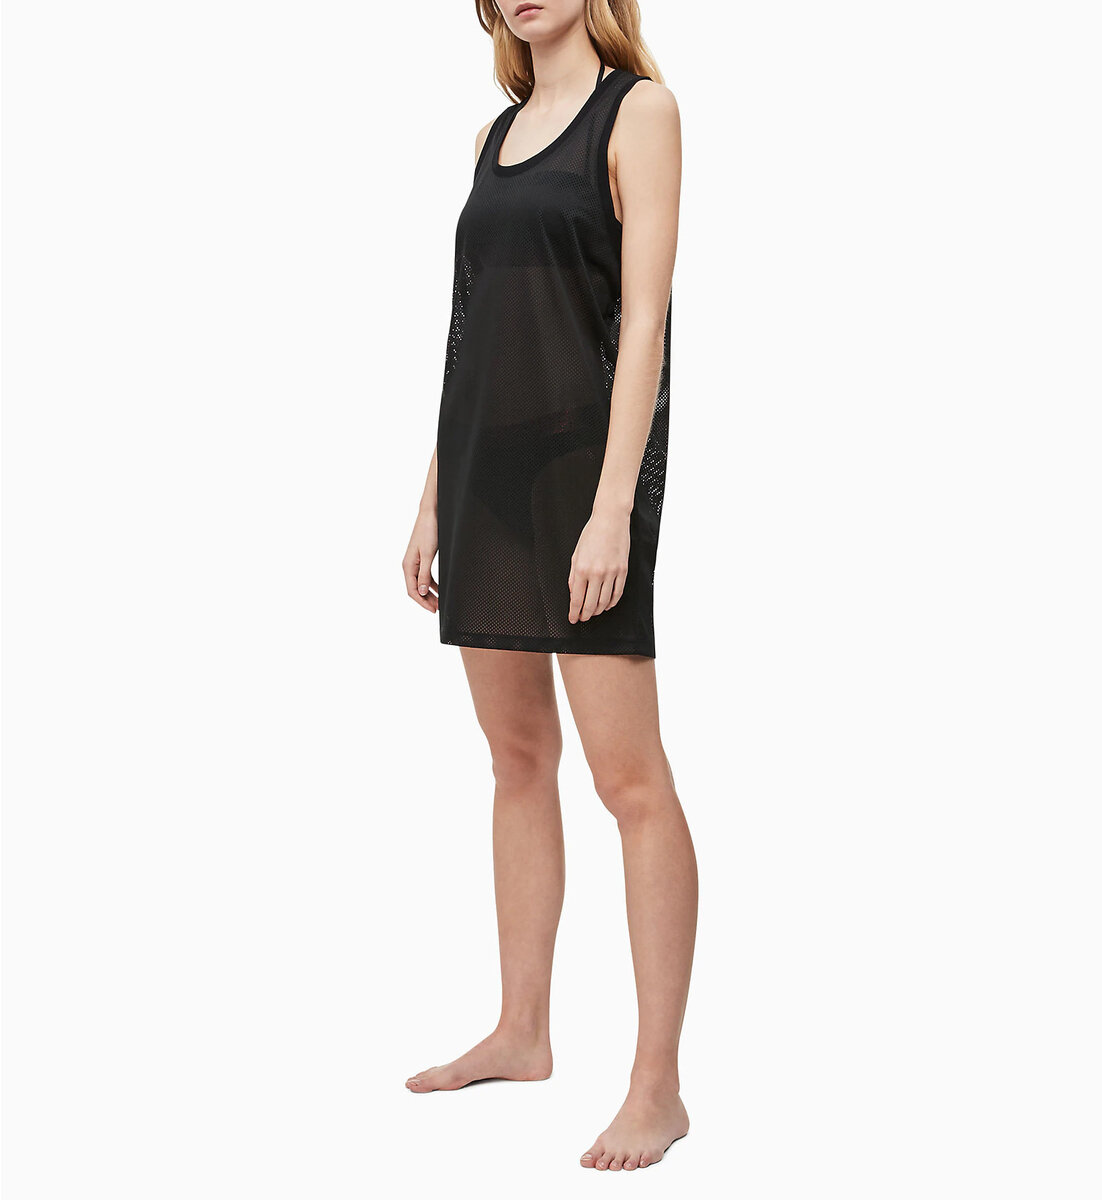 Dámské plážové šaty O8TM5 černá - Calvin Klein, černá S i10_P37916_1:3_2:92_